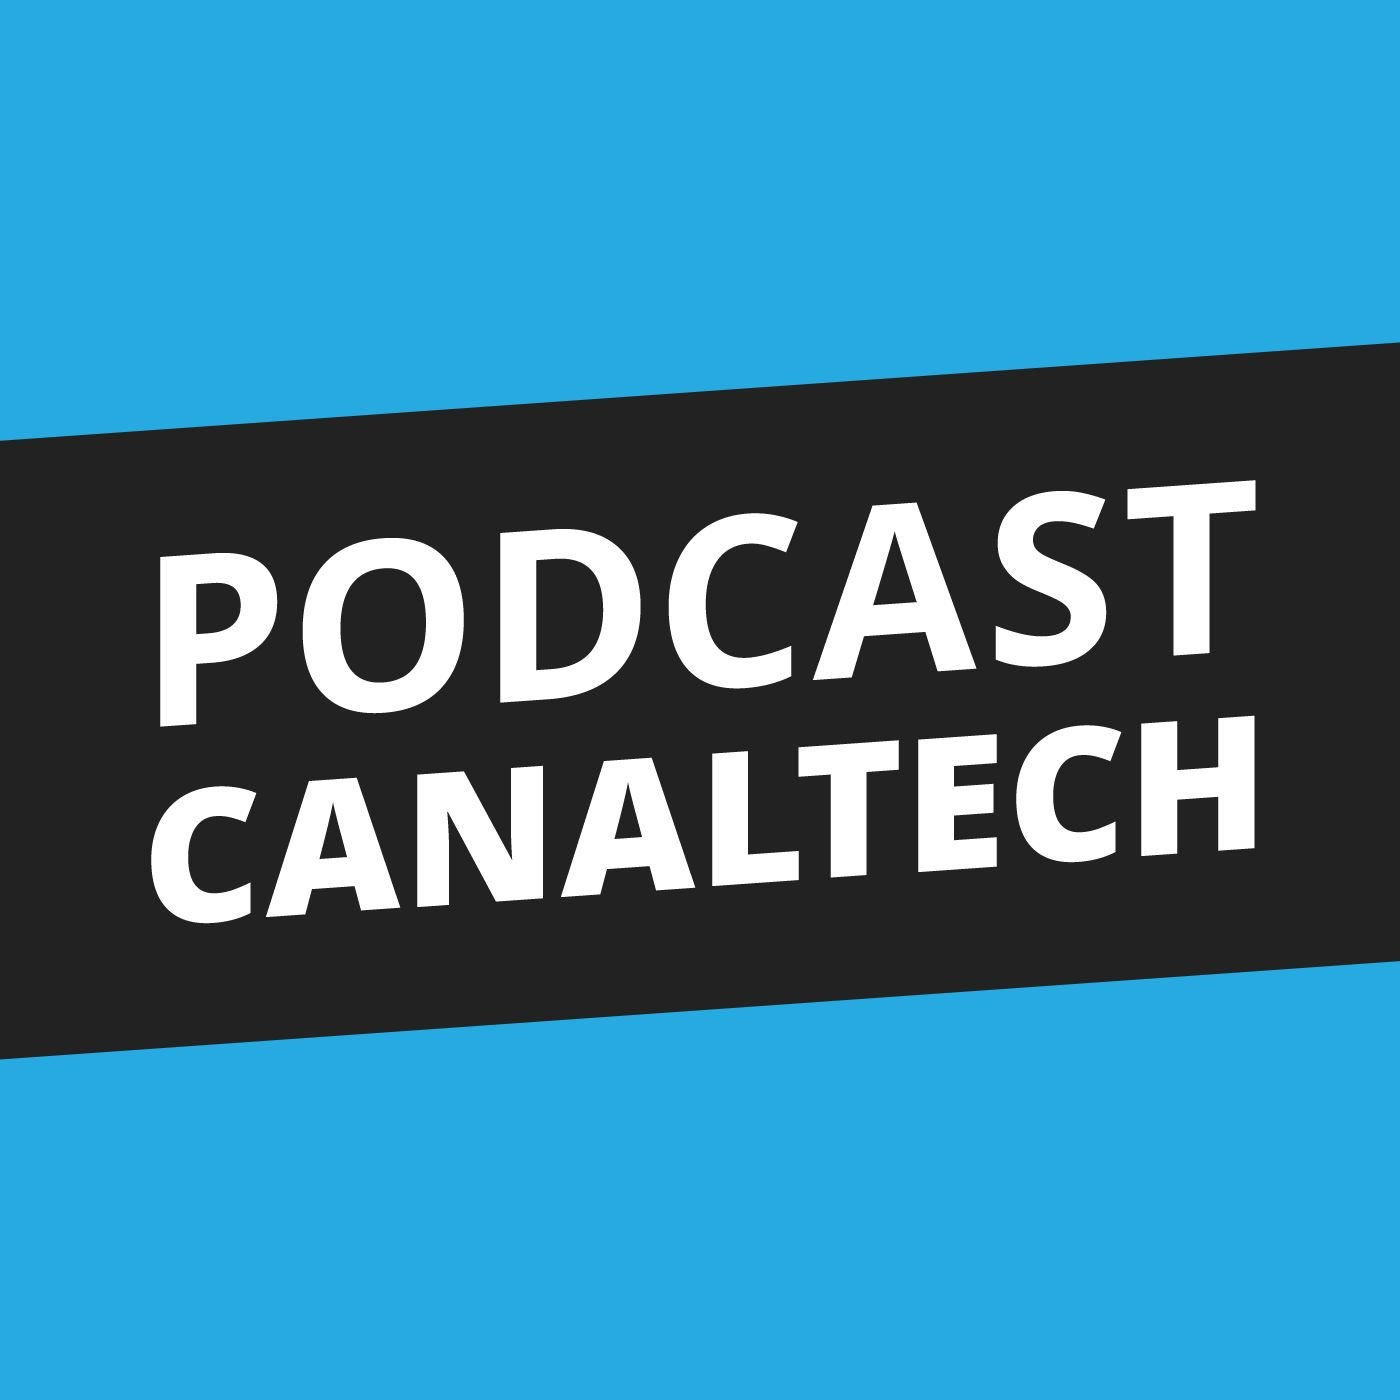 Podcast Canaltech - 12/12/13